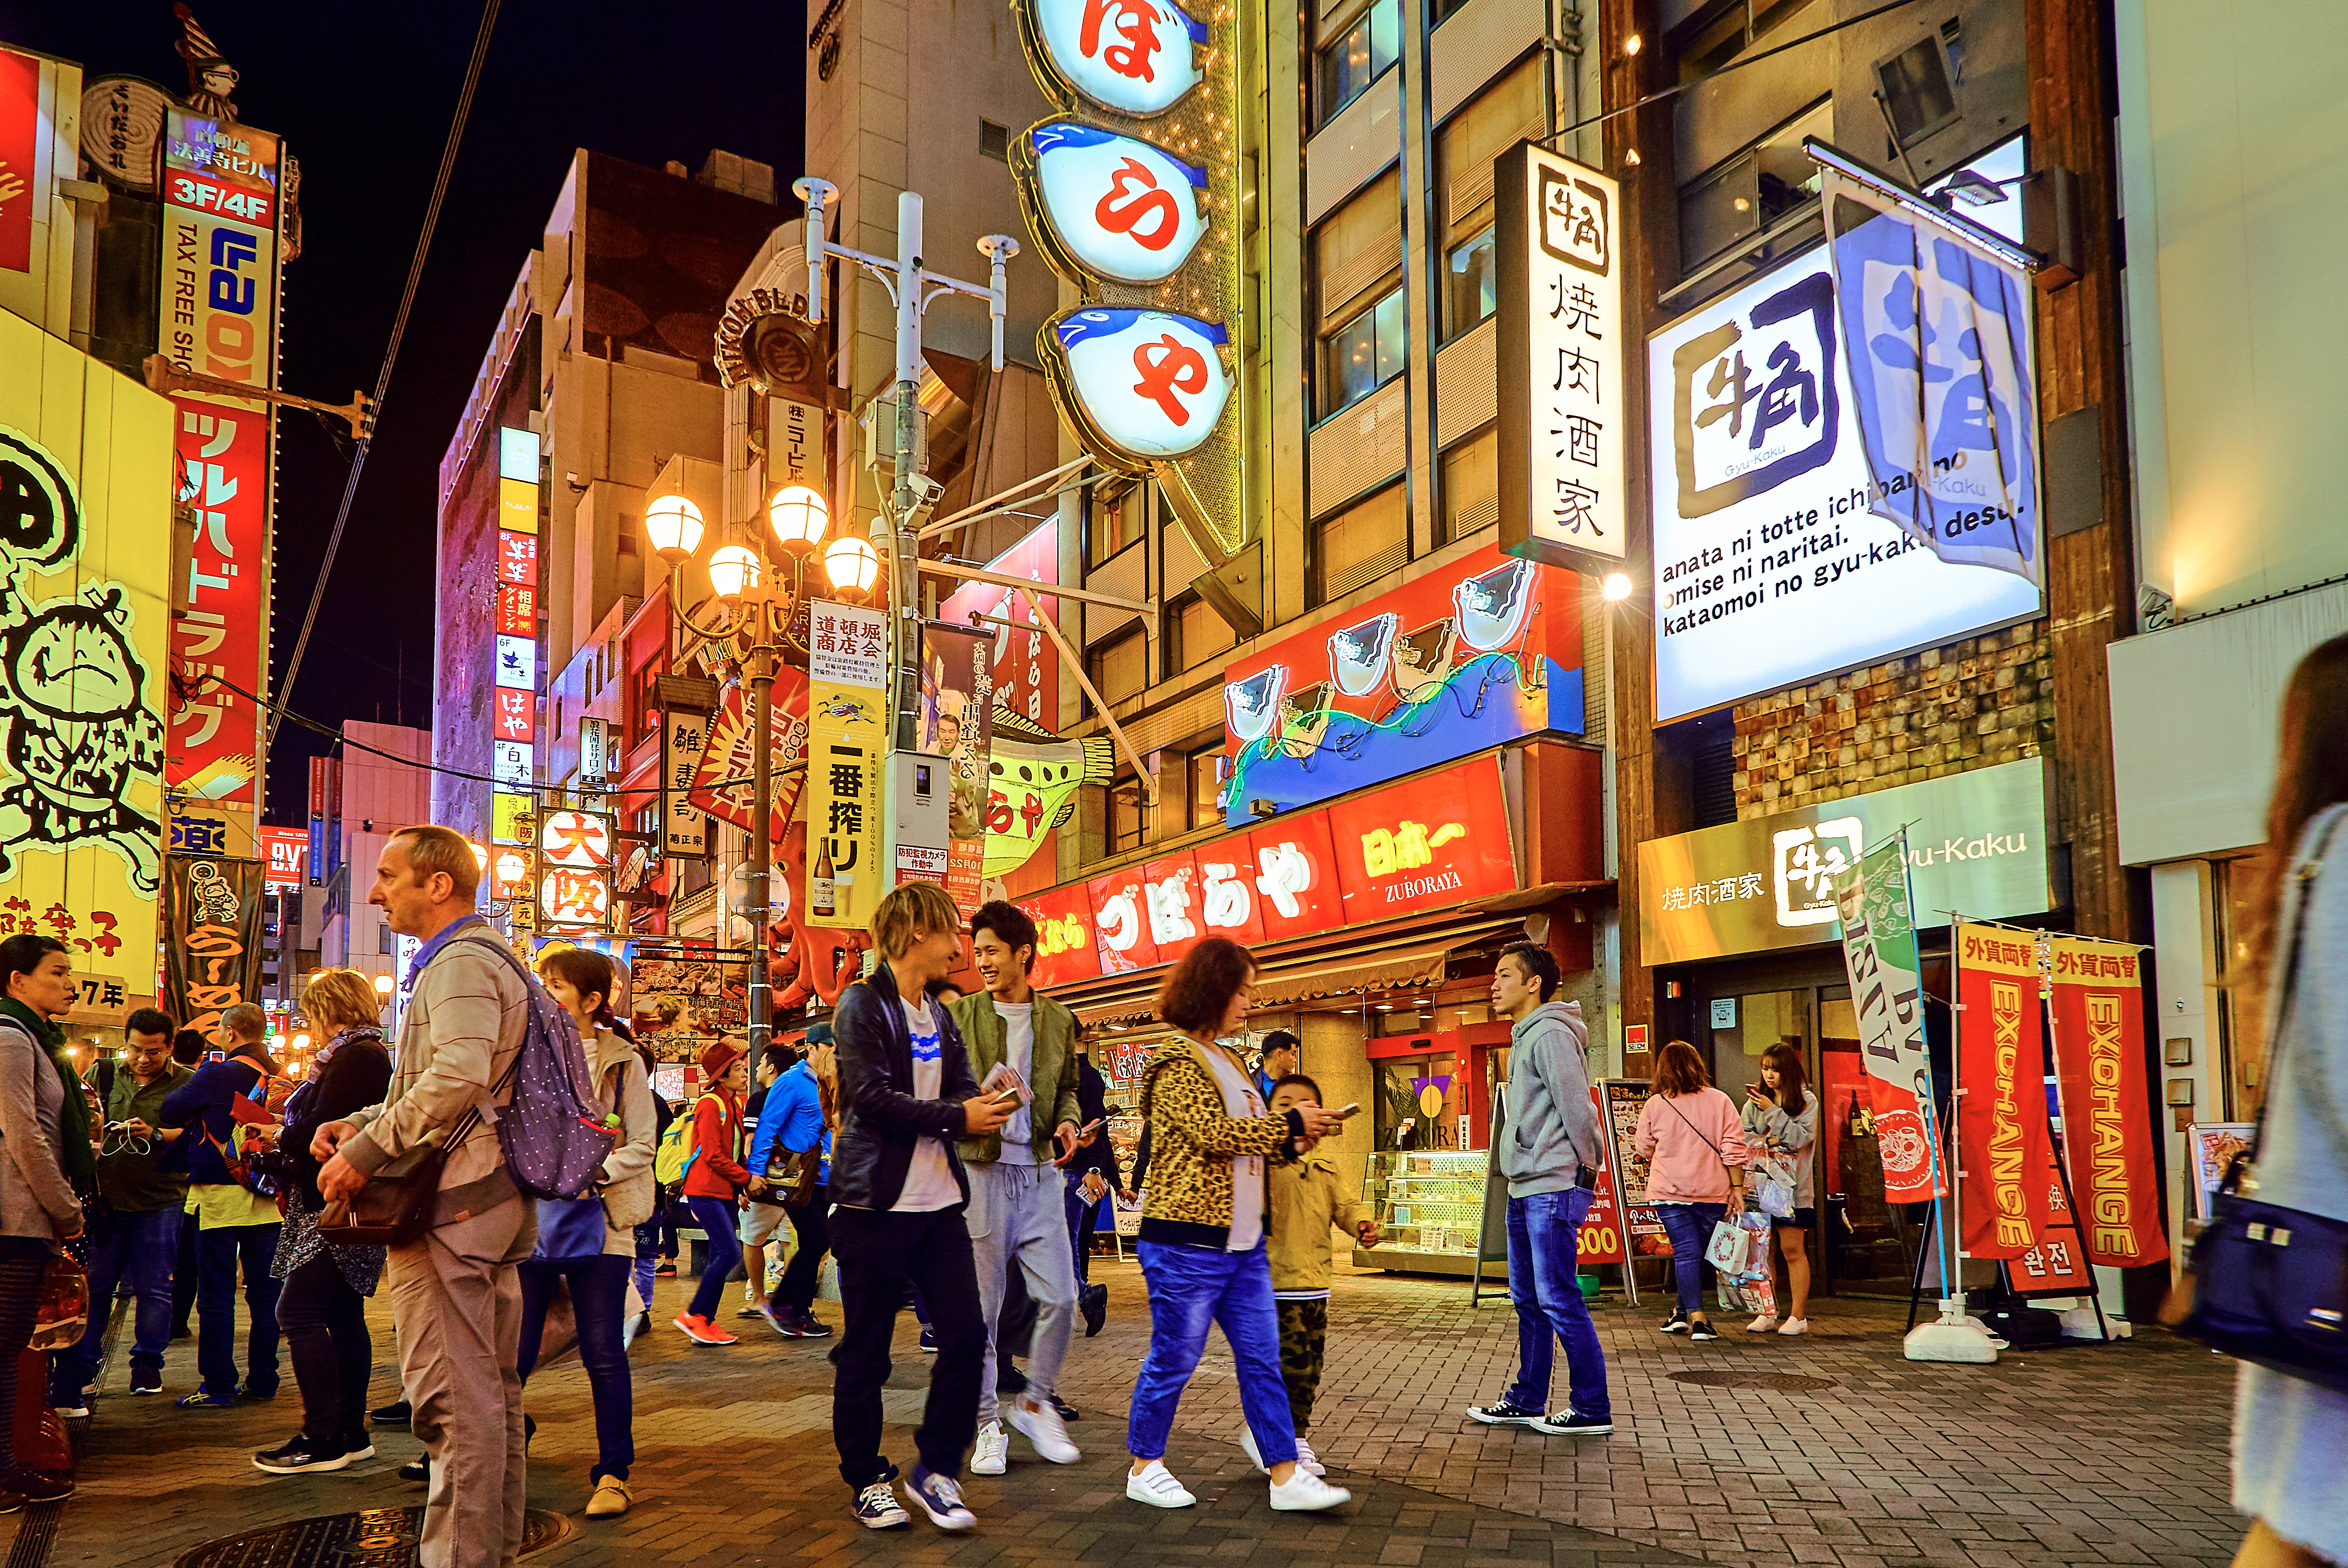 A busy Japanese street